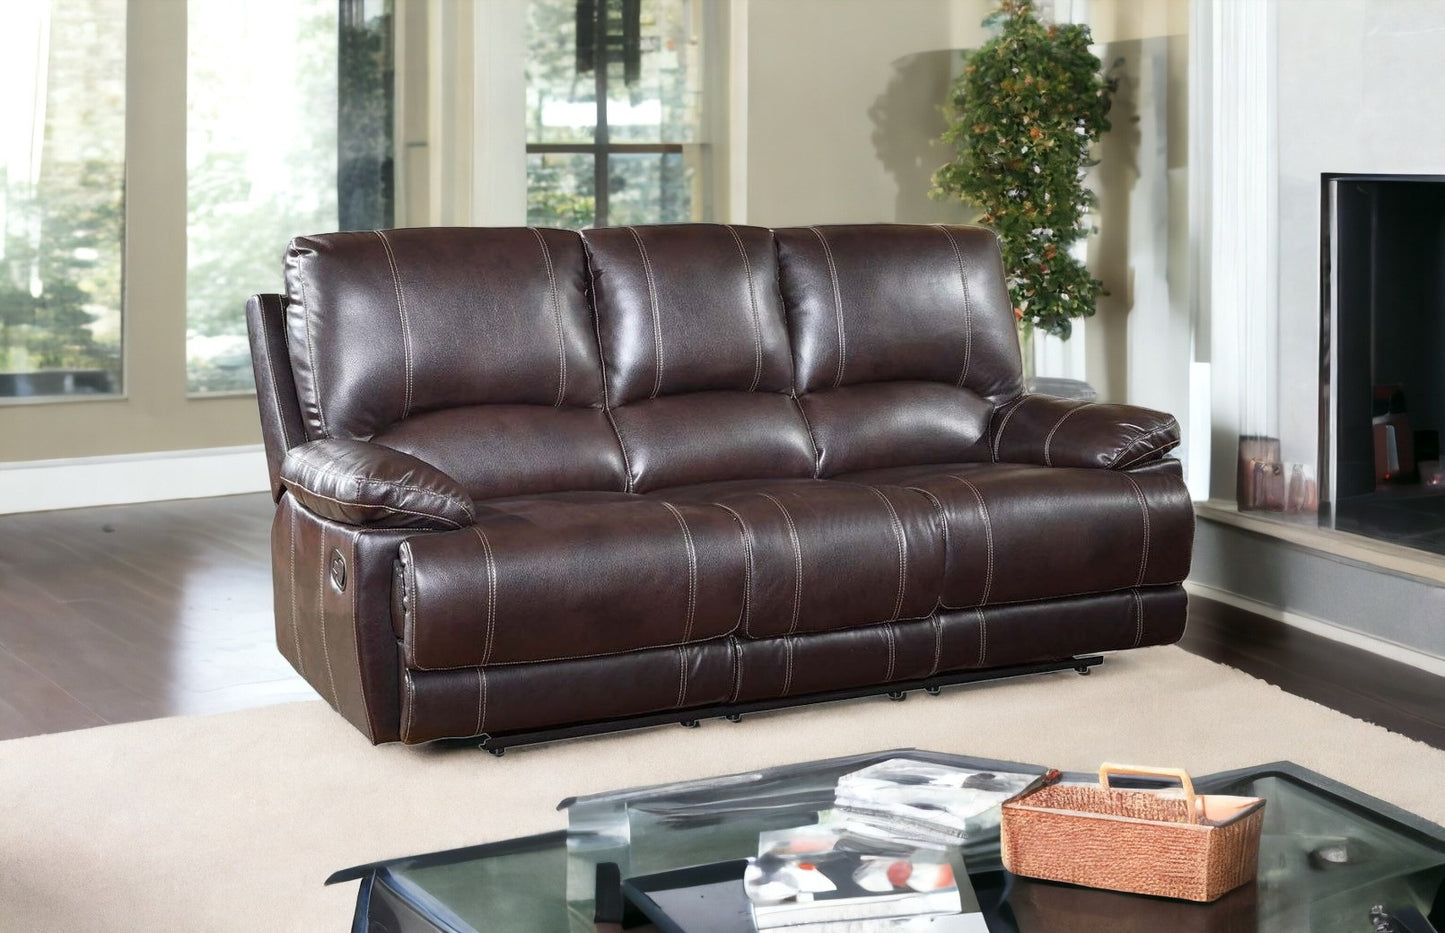 89" Brown Microfiber Reclining Sofa With Black Legs